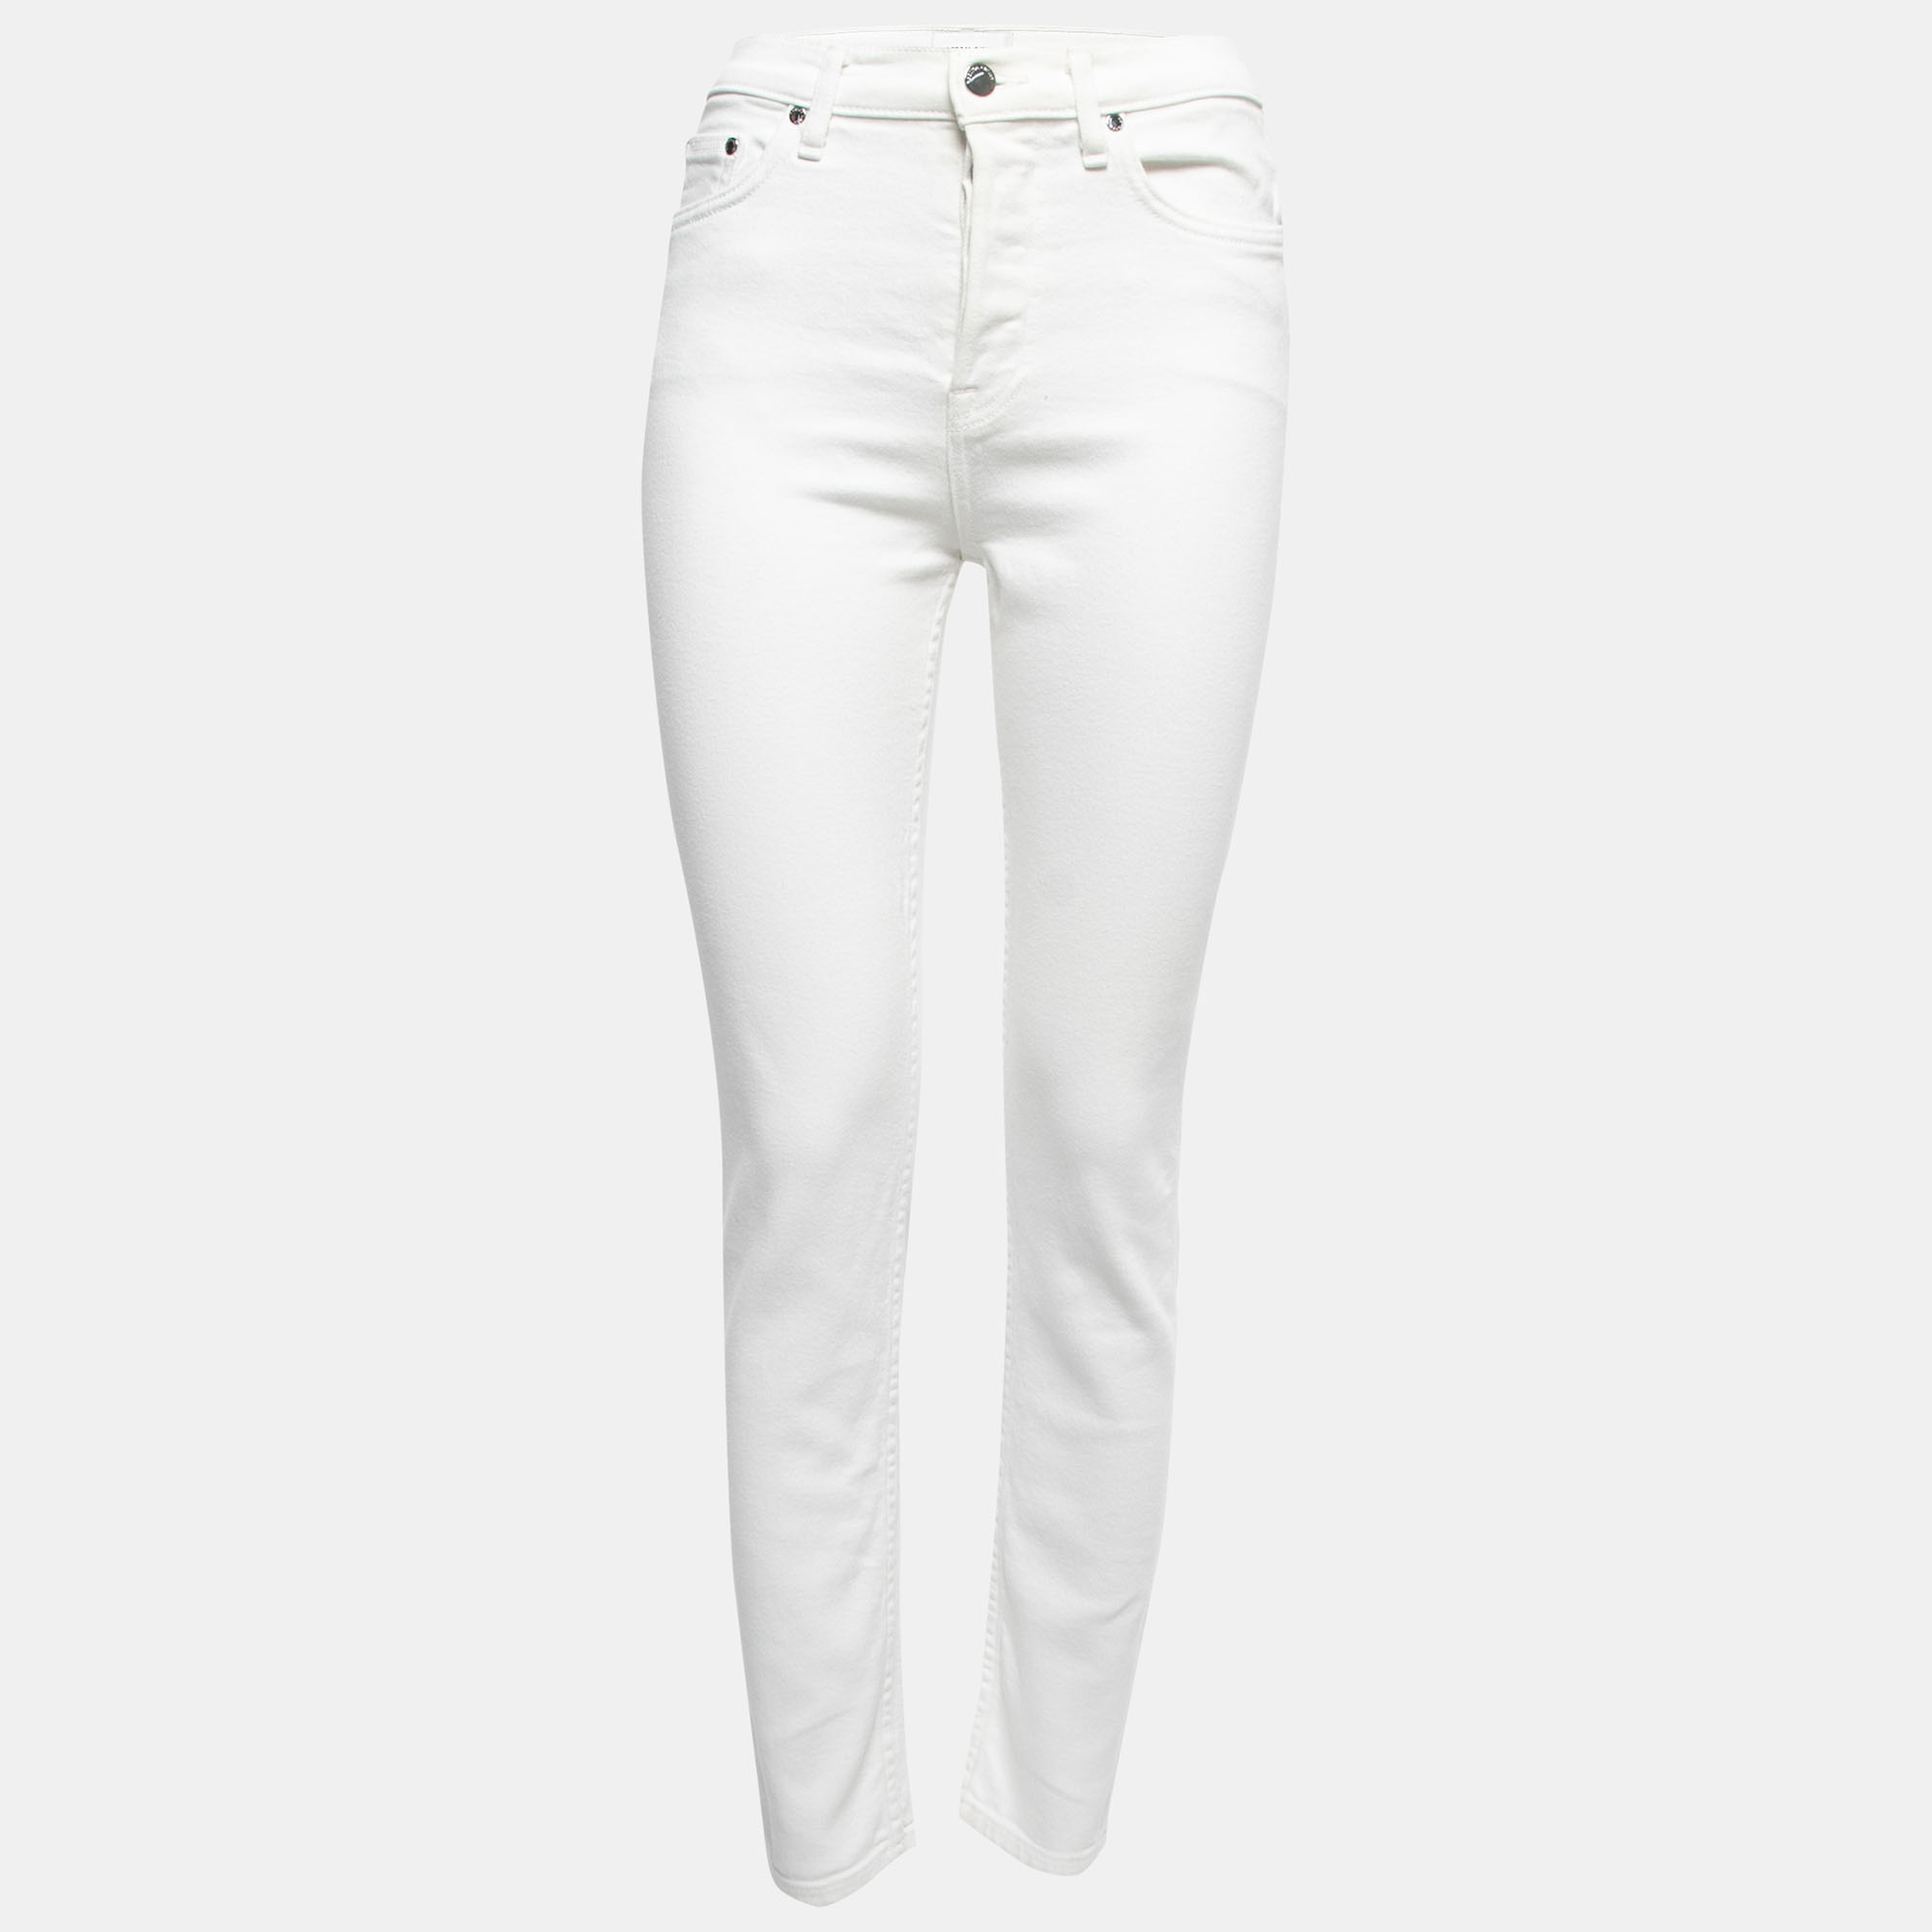 Cotton citizen white denim medium rise slim fit jeans s waist 25"